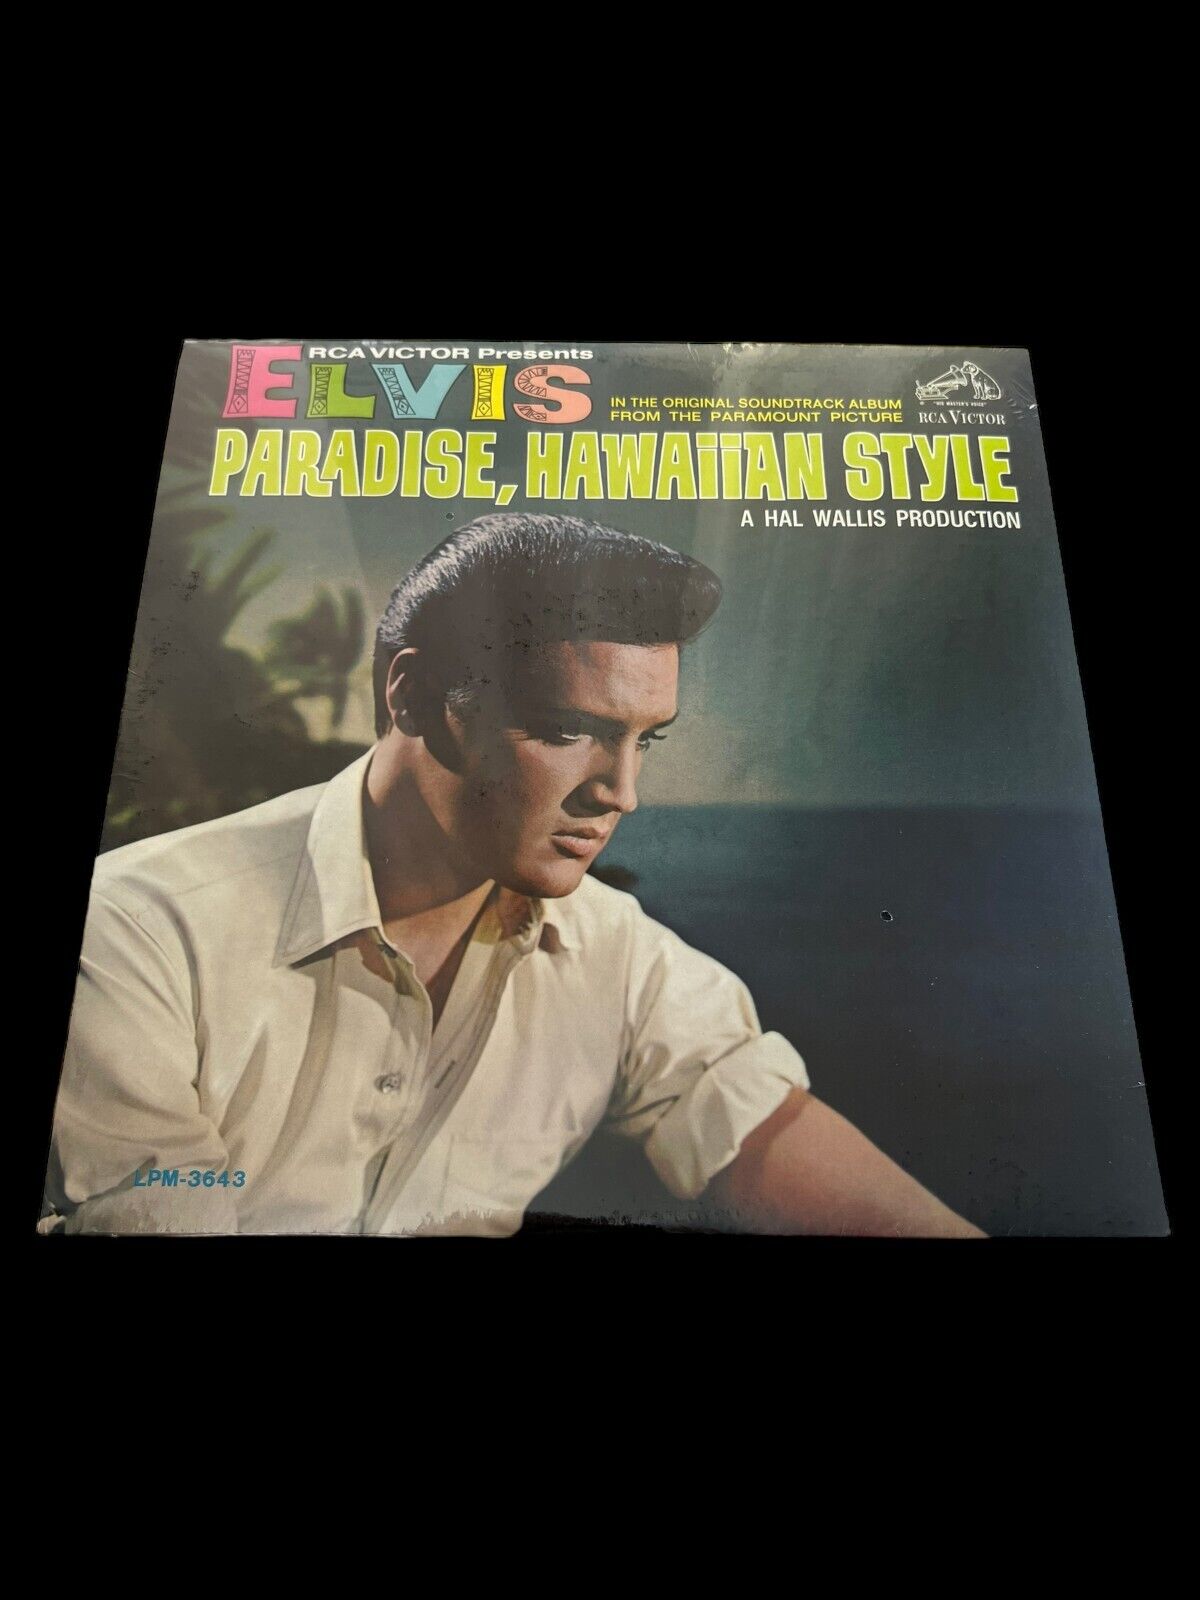 SEALED, Elvis Presley – Paradise, Hawaiian Style, Mono, 1st pressing, US, 1966